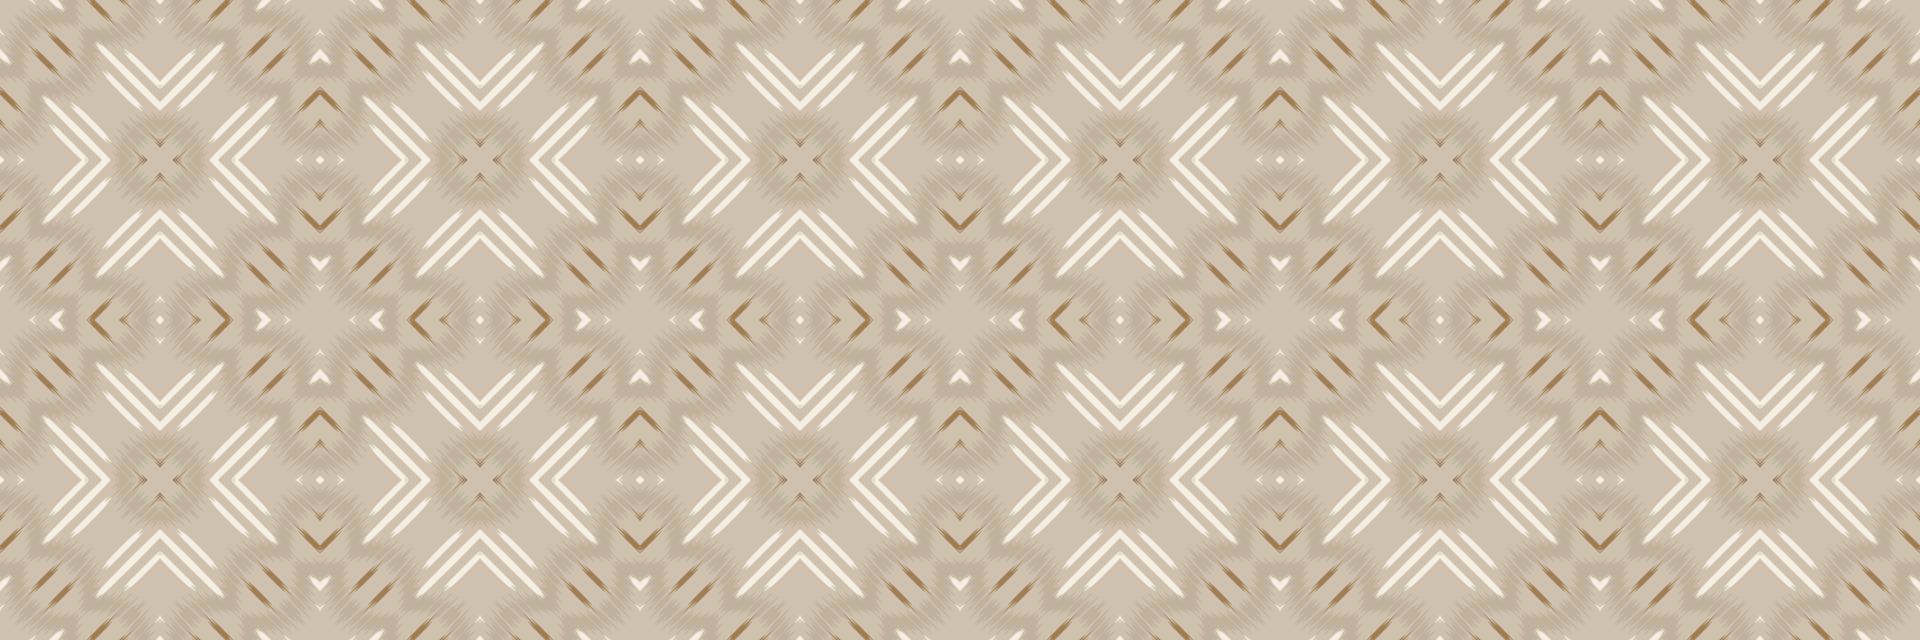 batik textil ikkat o ikat imprimir patrón sin costuras diseño de vector digital para imprimir saree kurti borneo borde de tela símbolos de pincel diseñador de muestras